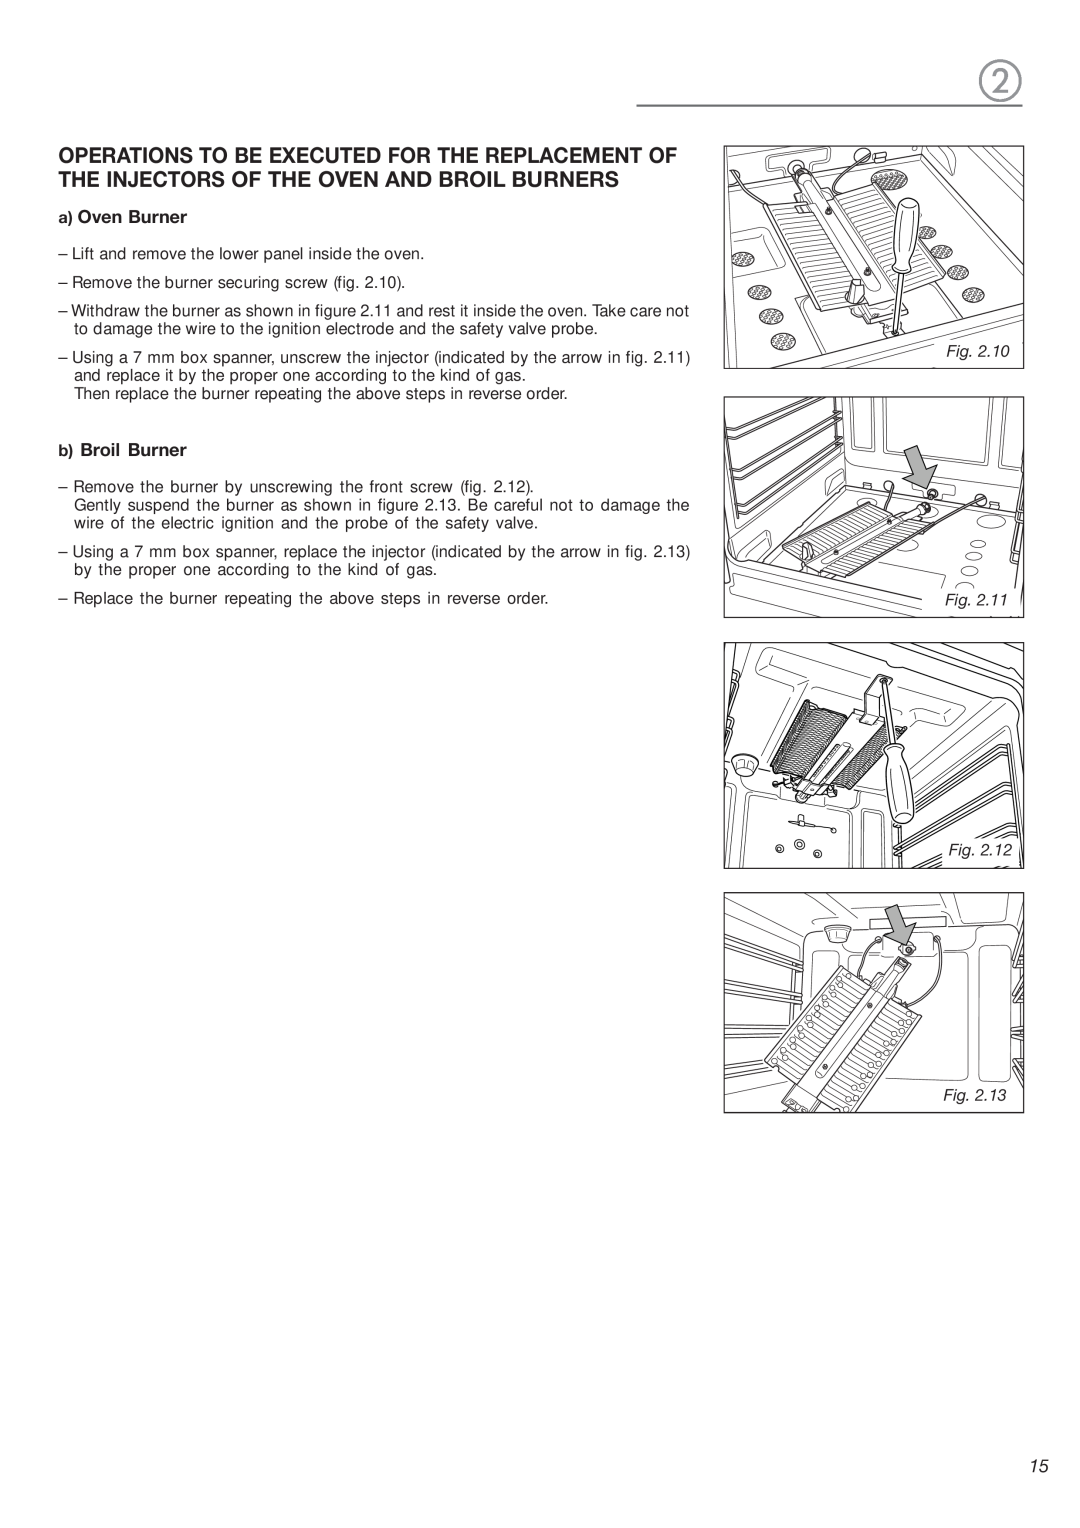 DeLonghi DEFSGG 24 SS installation instructions a Oven Burner, b Broil Burner 